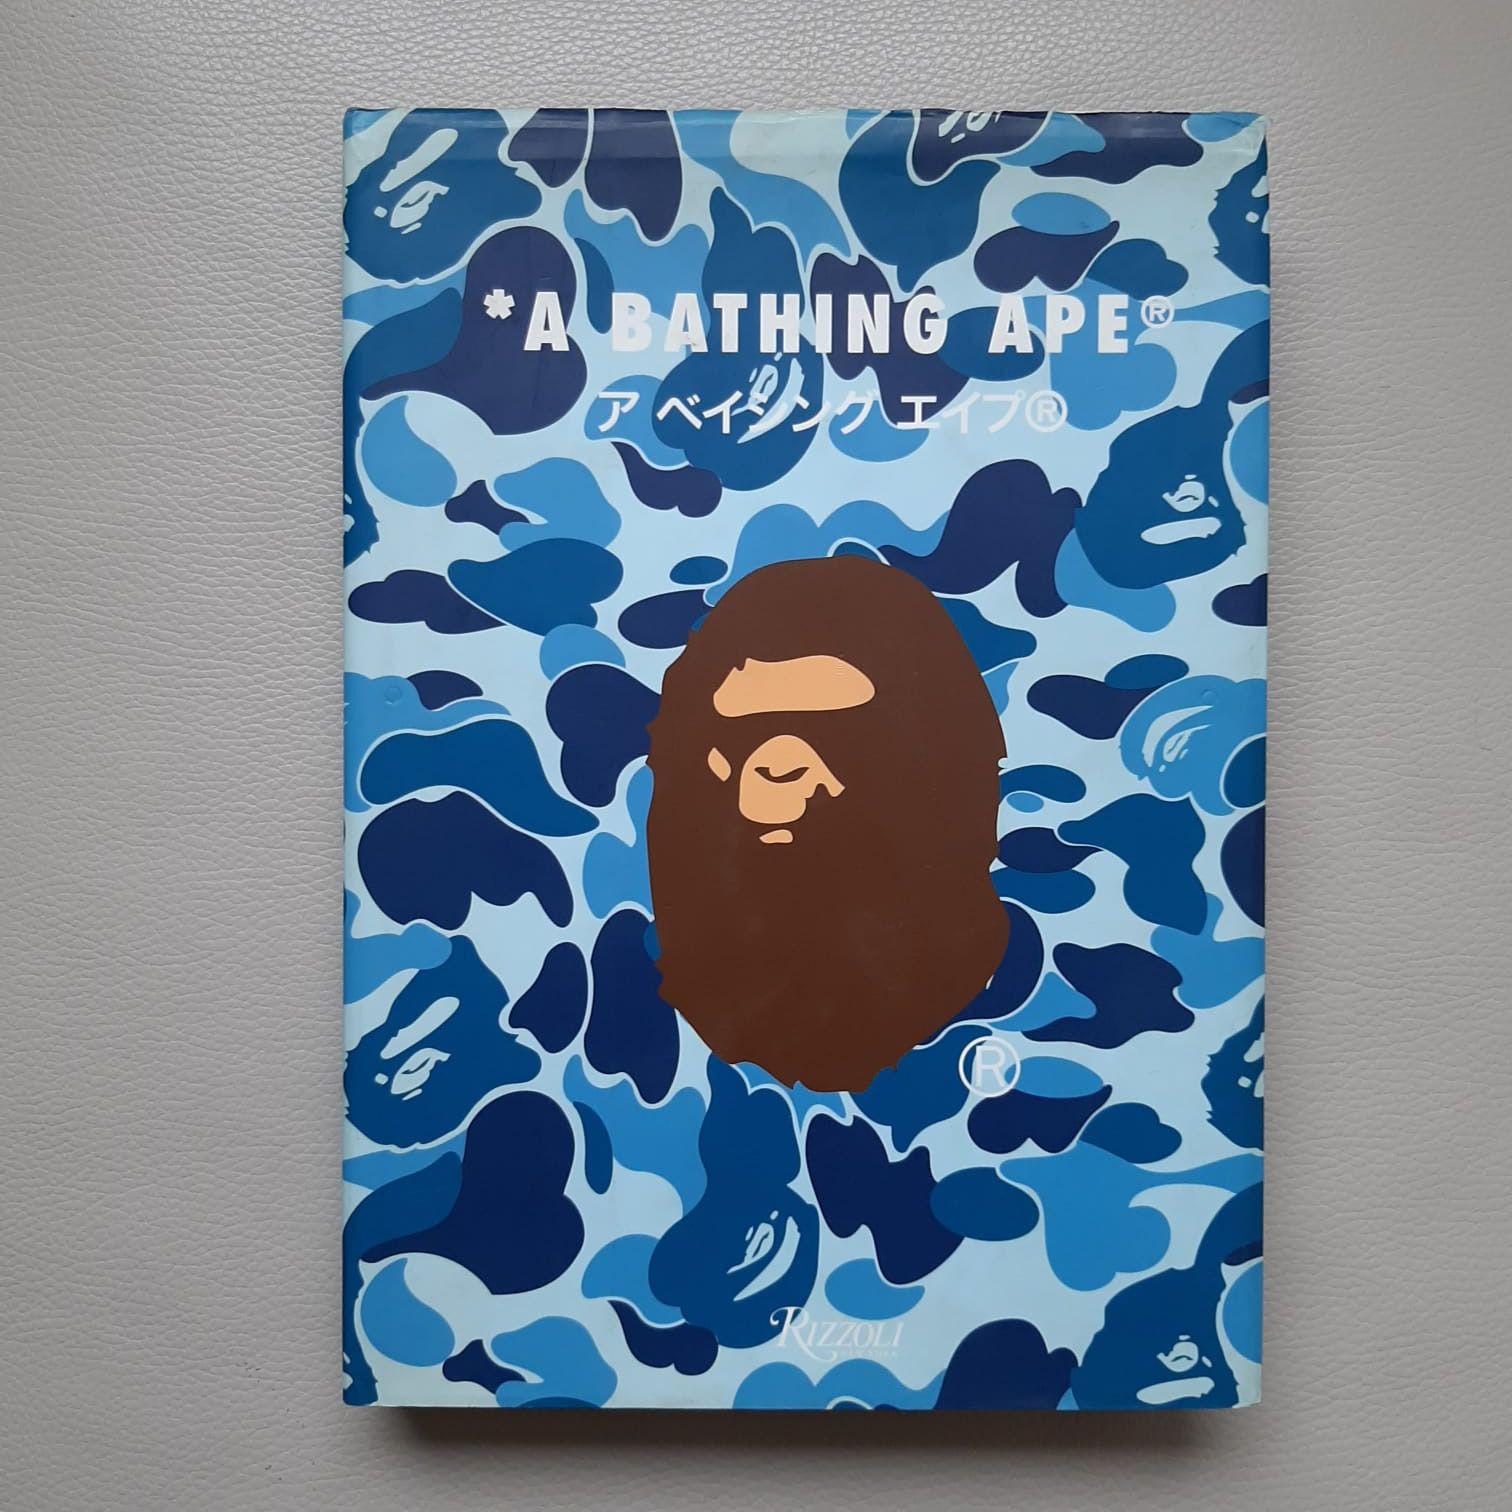 Bape BAPE (A Bathing Ape) Rizzoli Book | Grailed